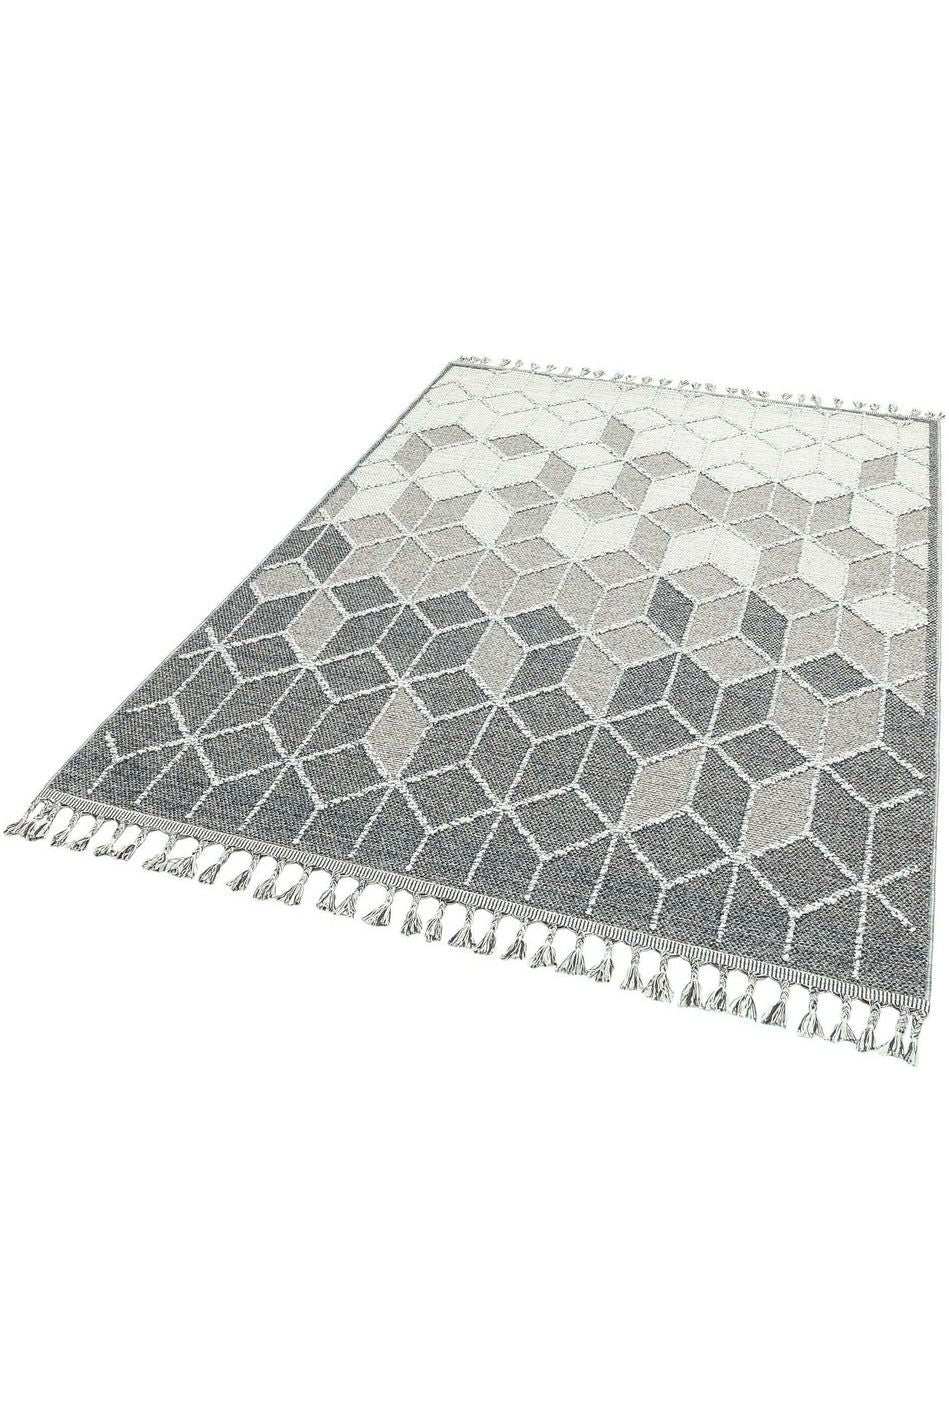 #Turkish_Carpets_Rugs# #Modern_Carpets# #Abrash_Carpets#Sh 03 Grey